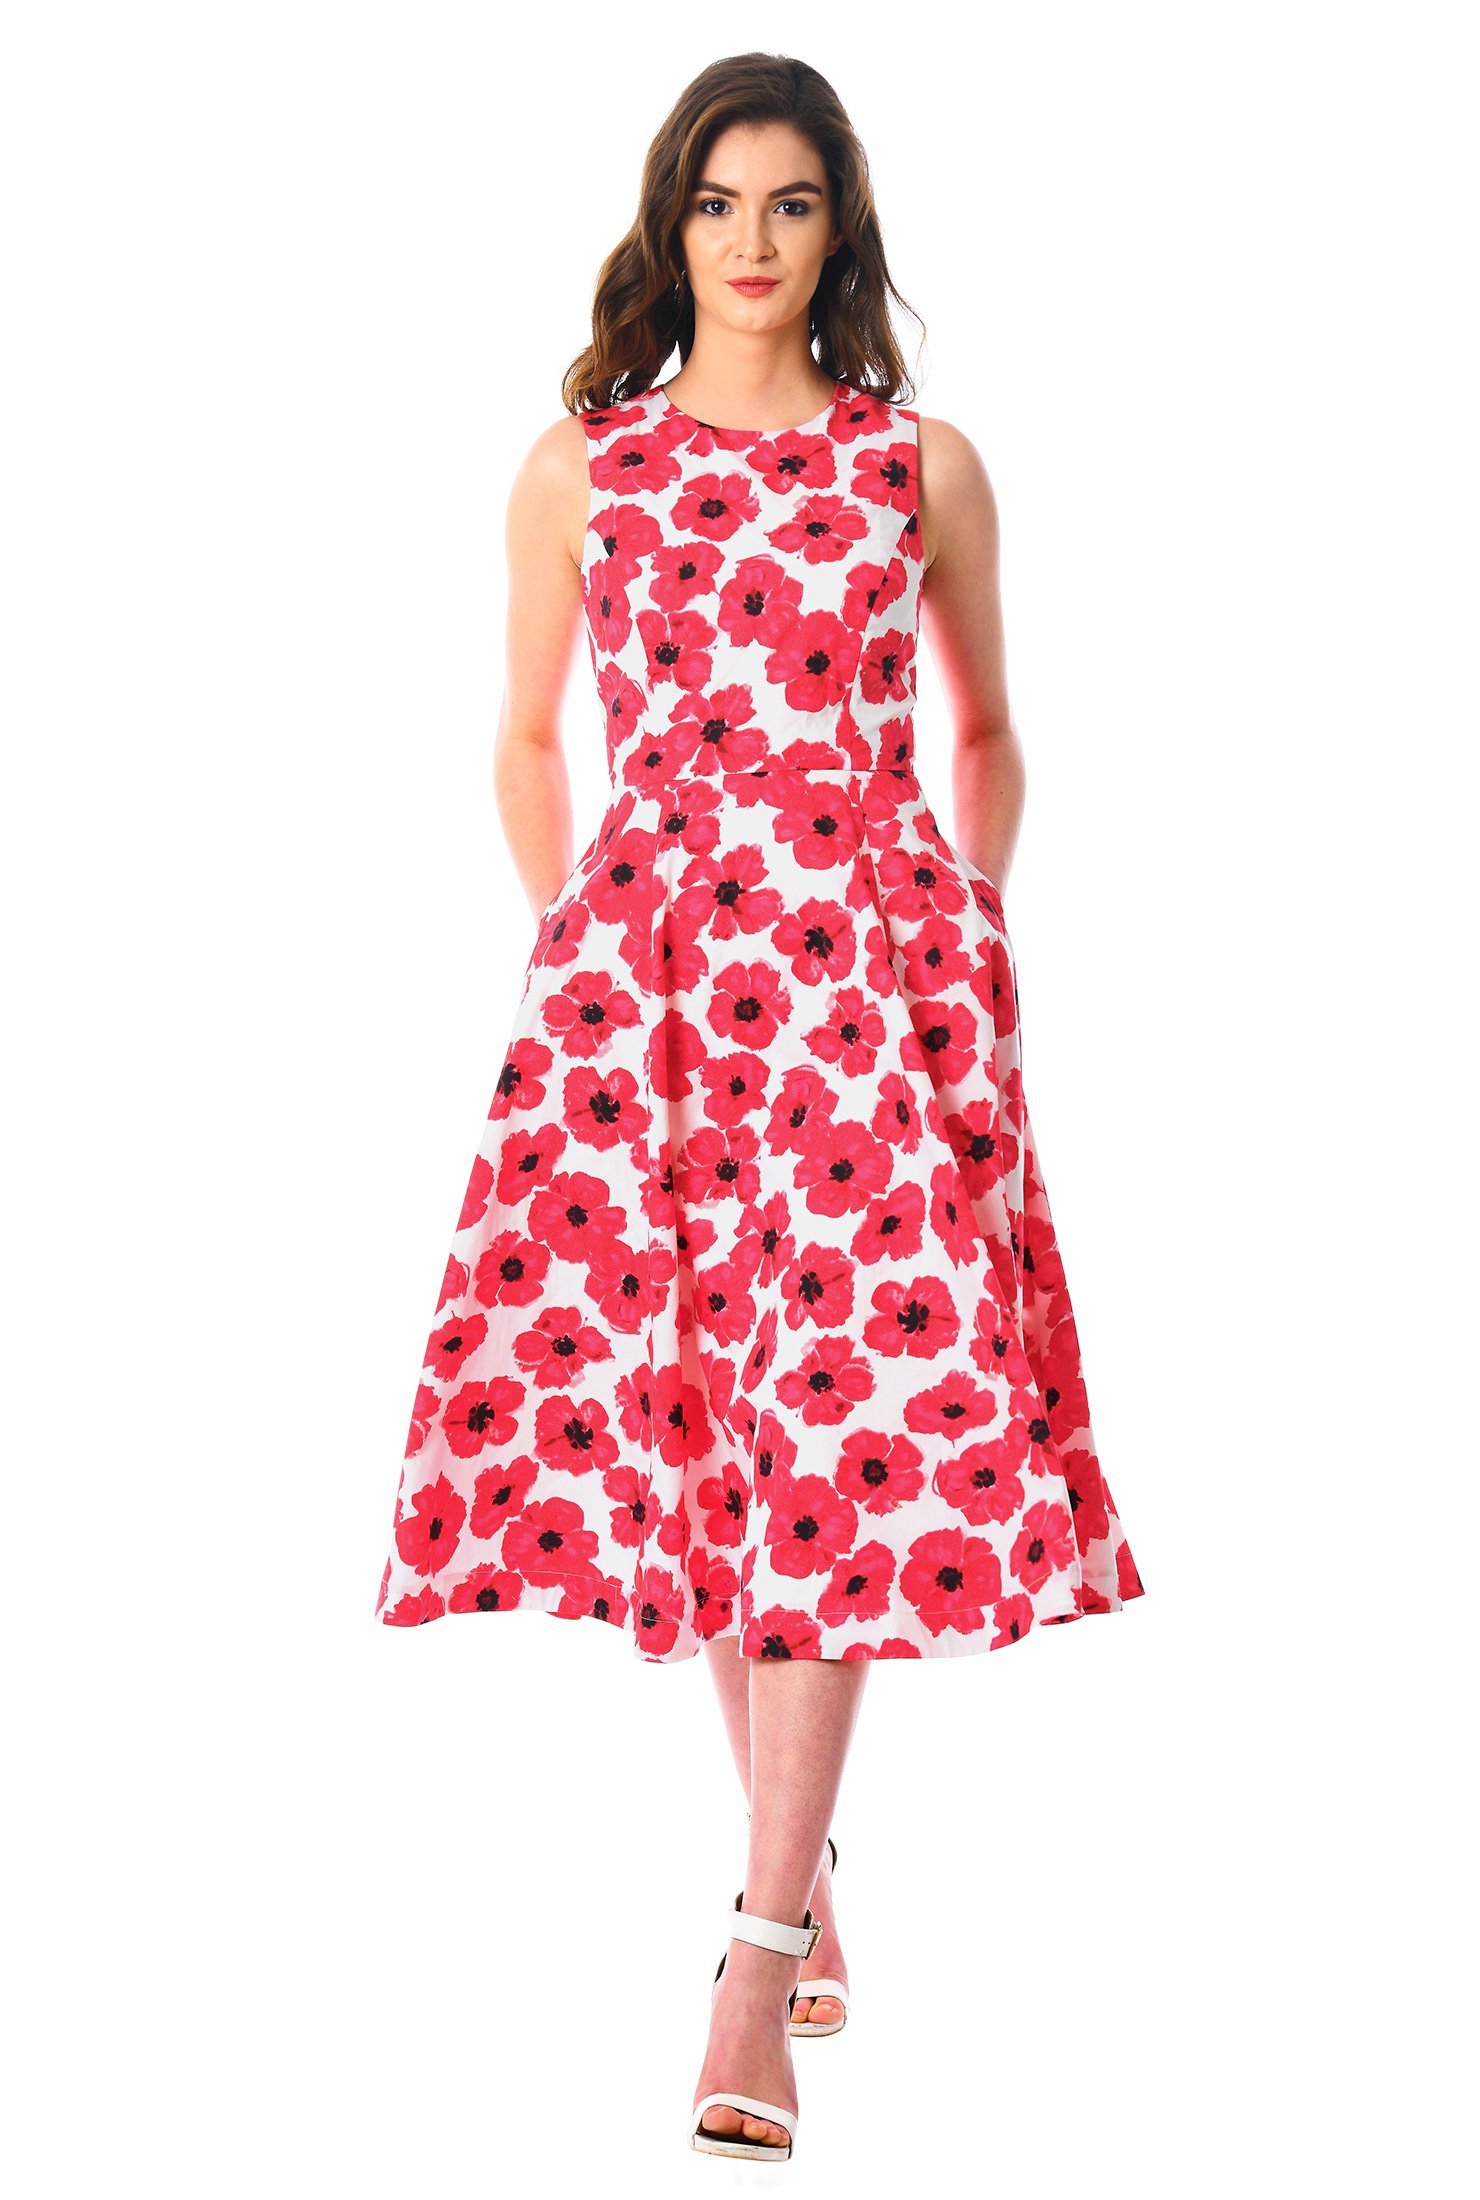 Shop Hibiscus print cotton poplin midi dress | eShakti